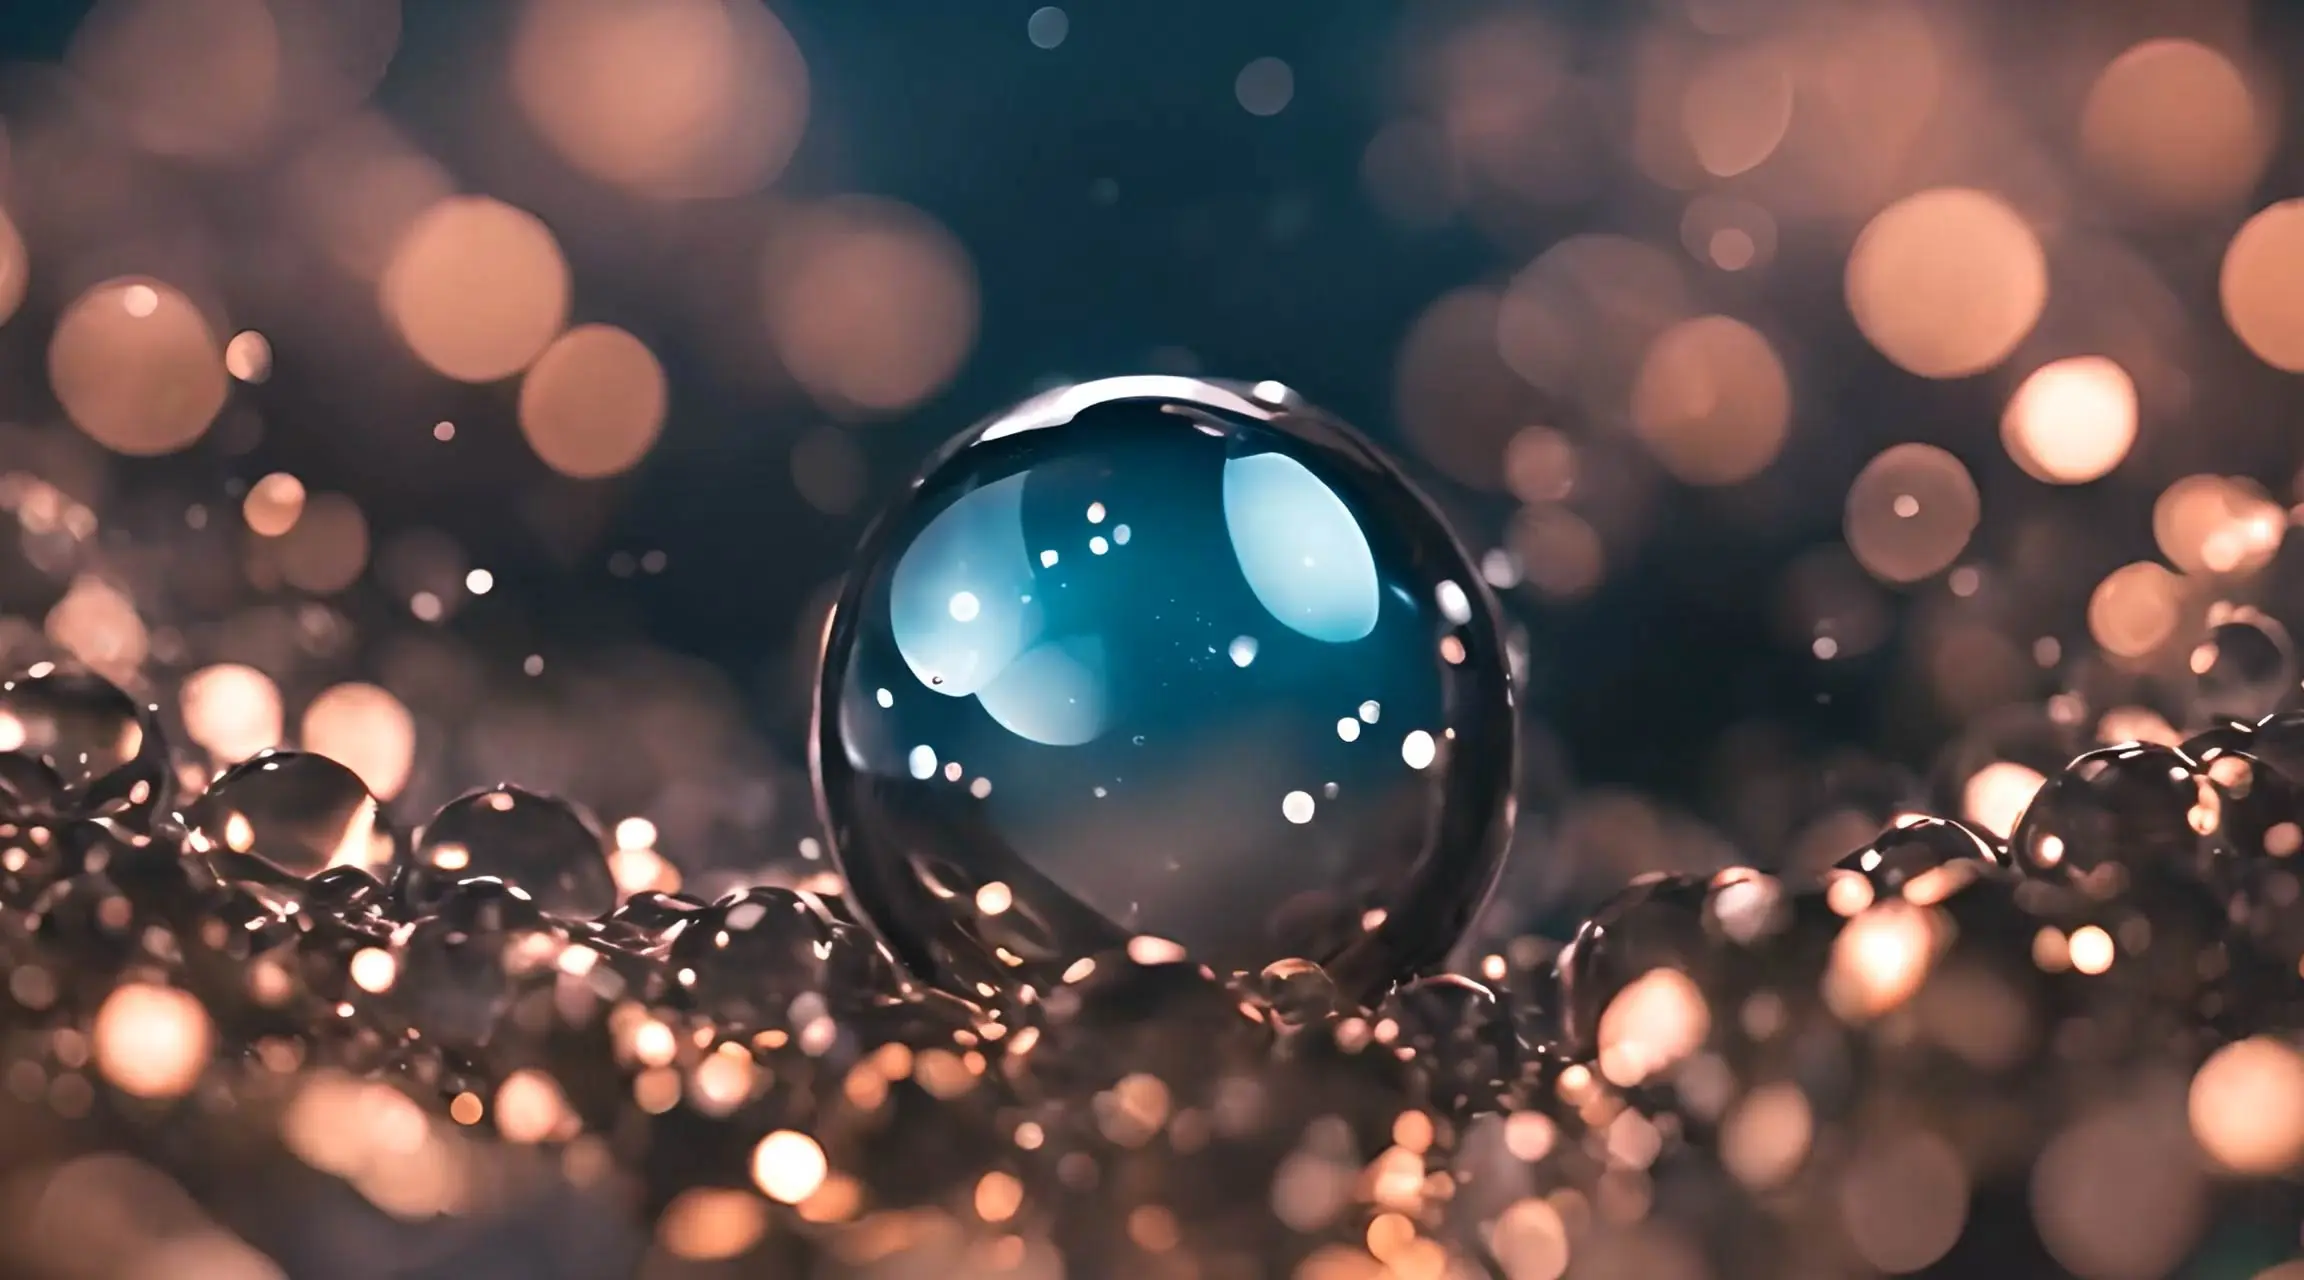 Sparkling Golden Bubbles Video Loop